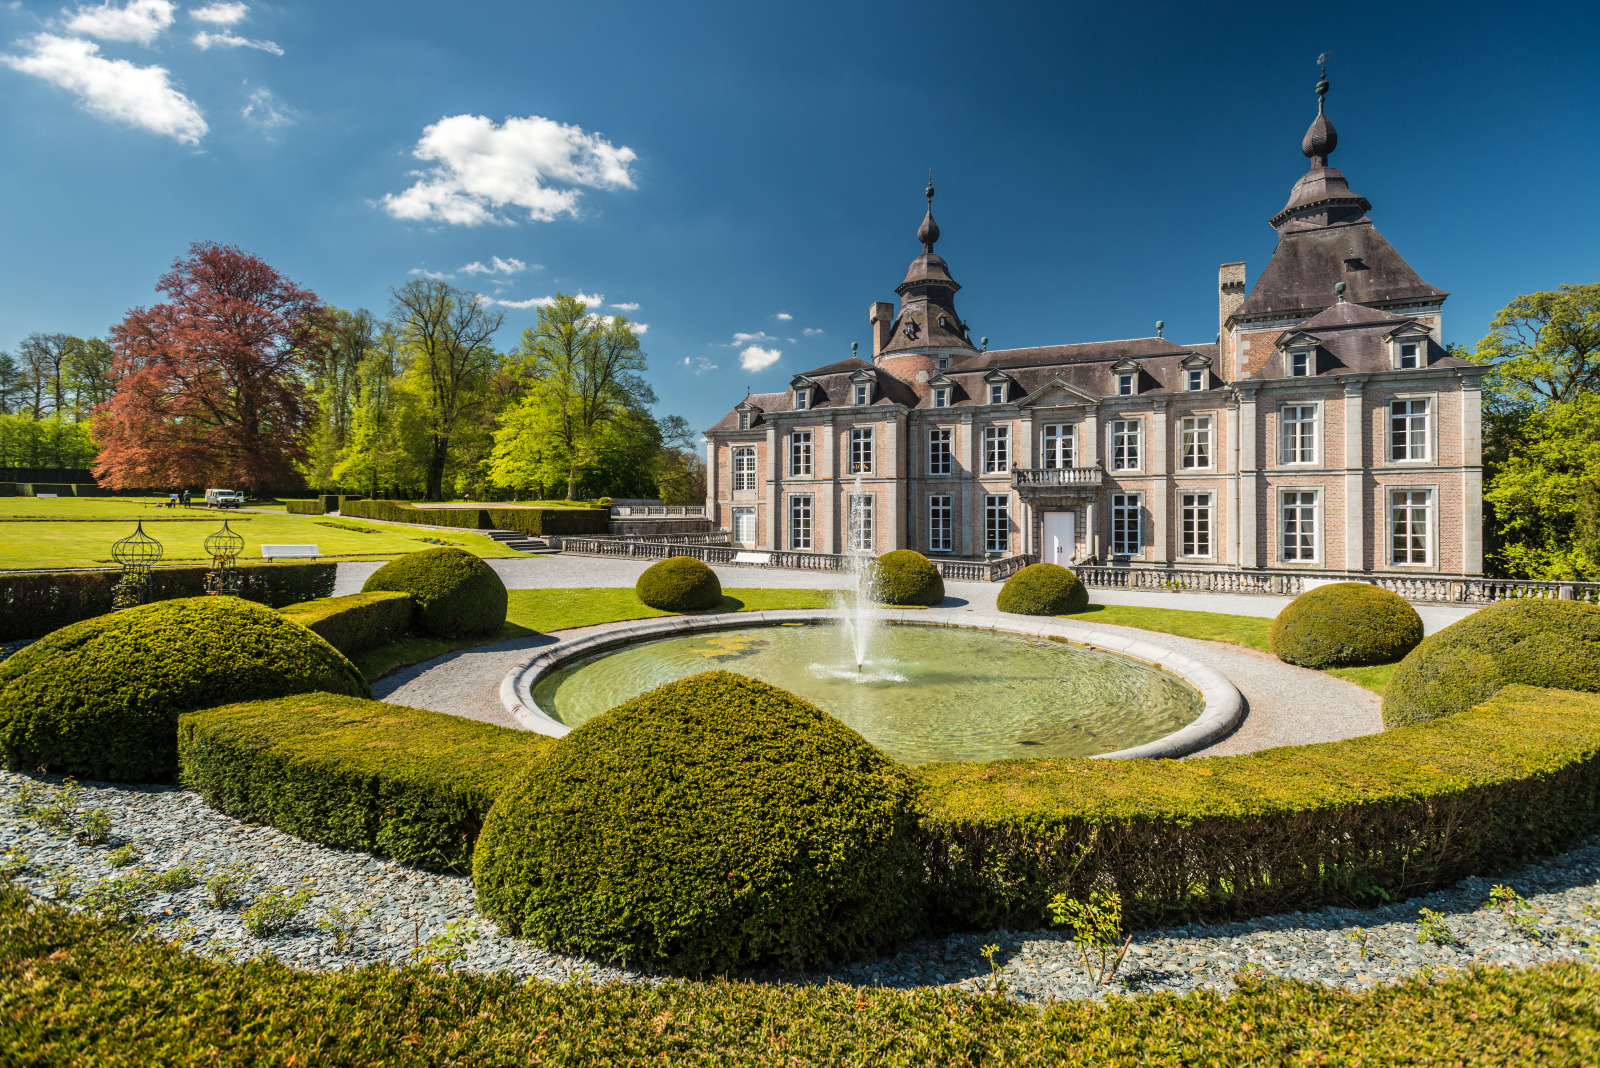 The Château de Modave fountains and gardens